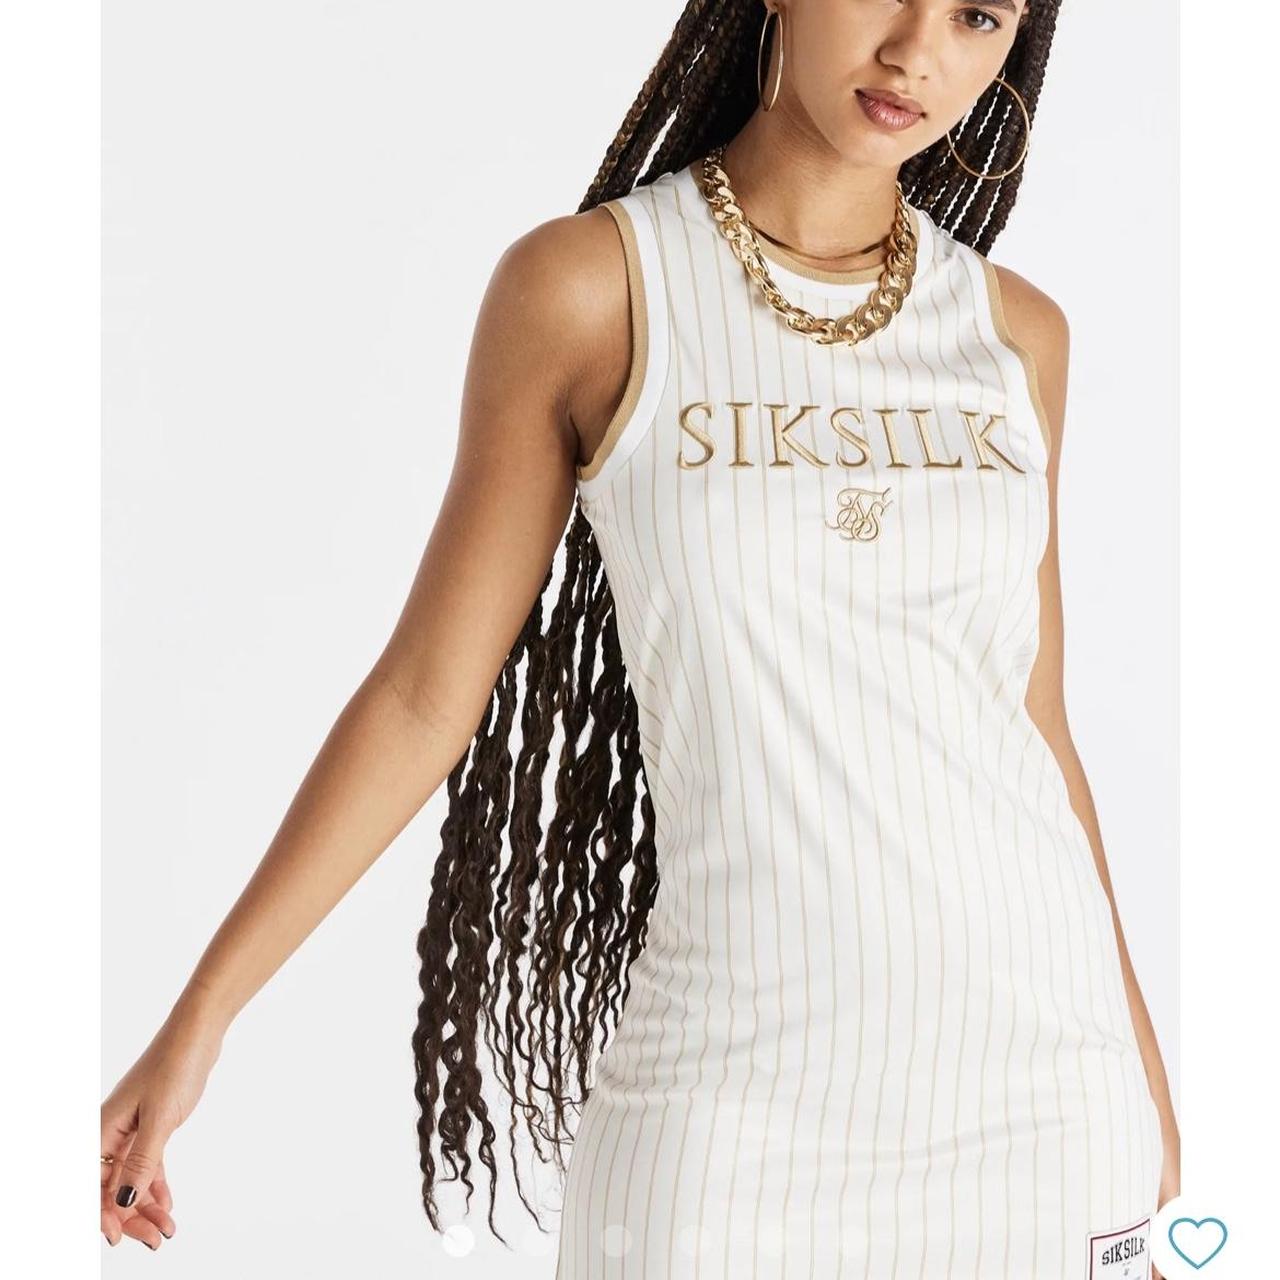 Product Image 1 - NWT SikSilk Basketball dress. This